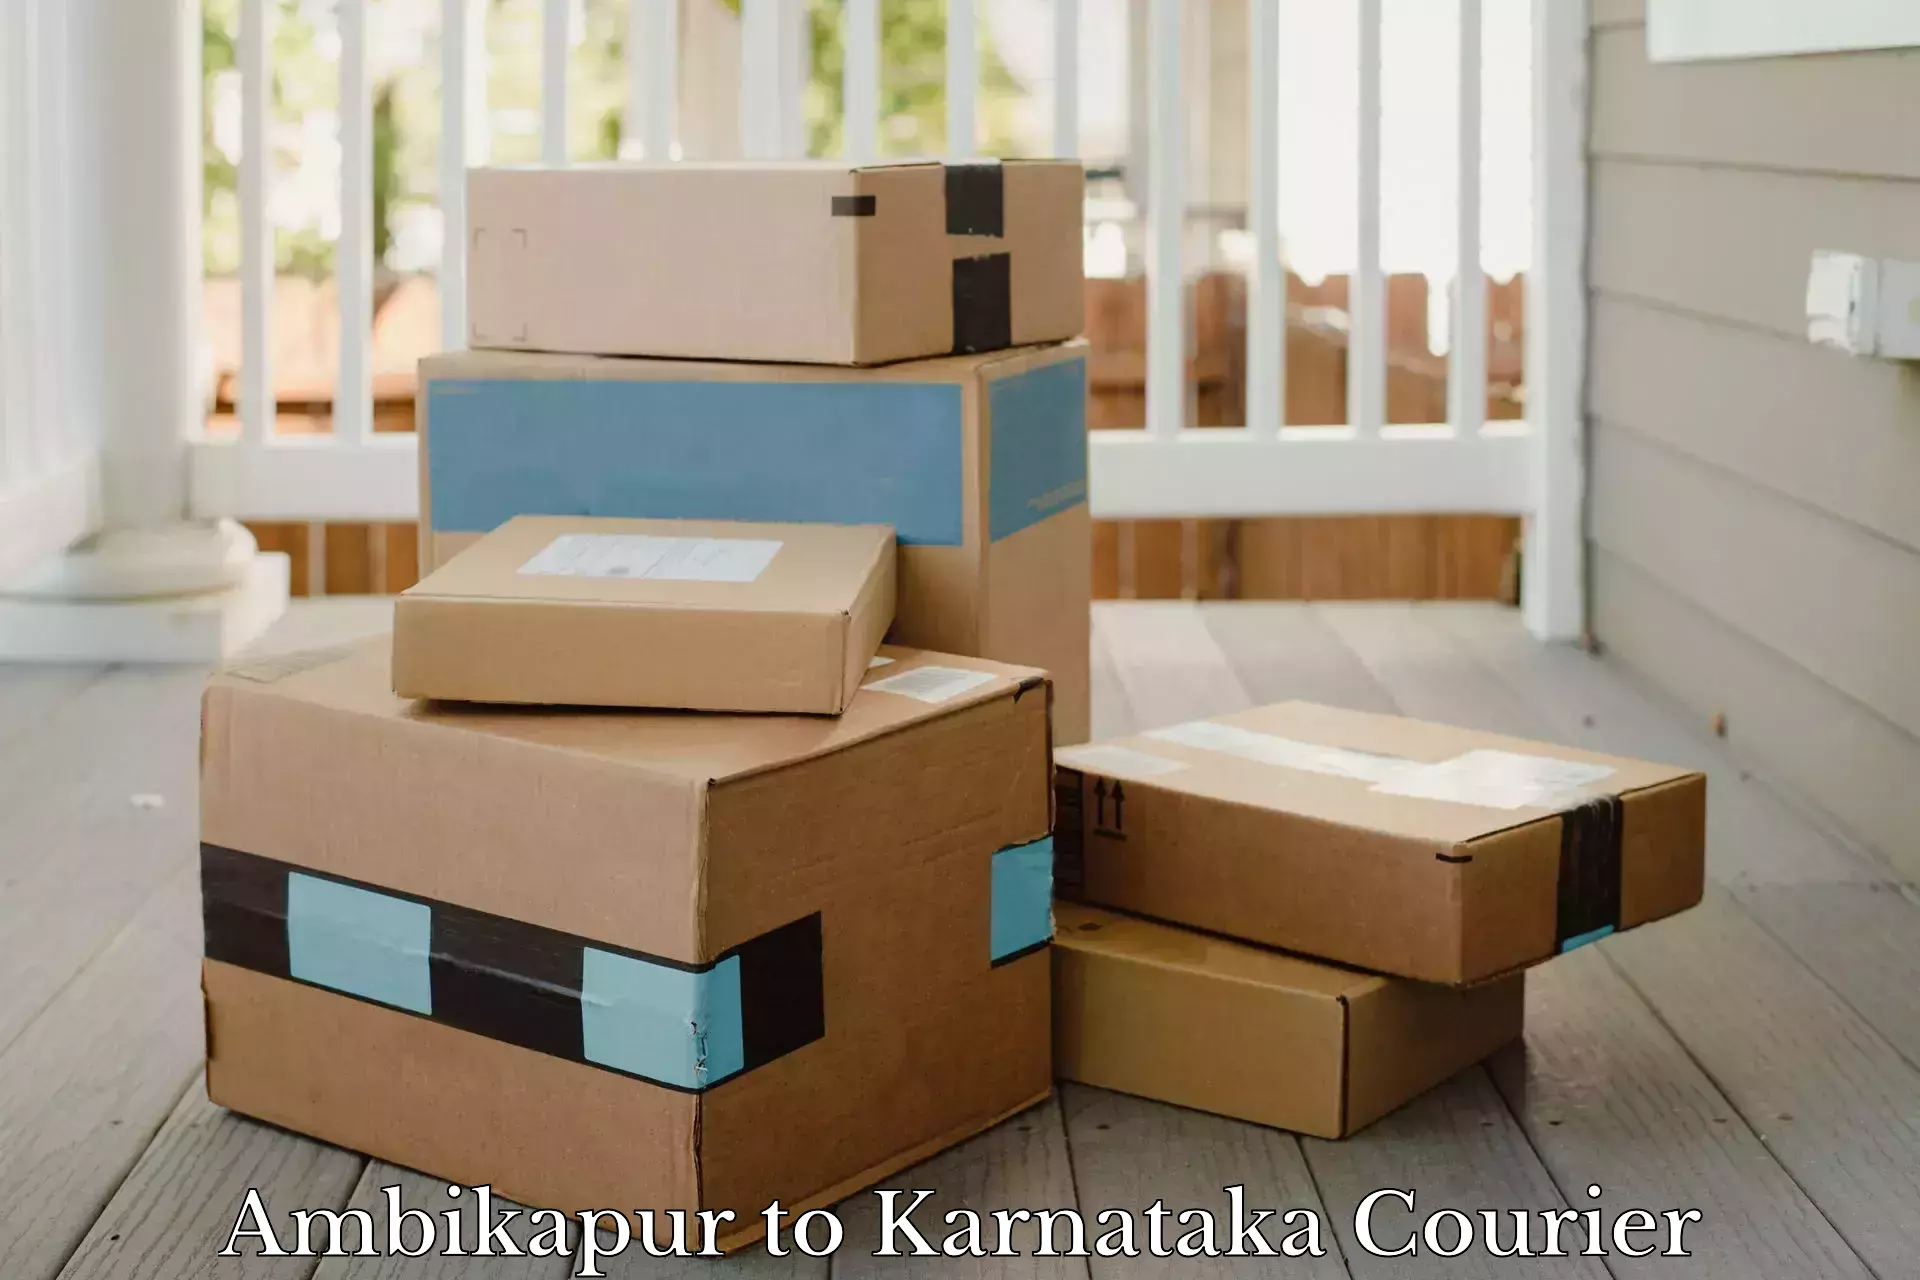 Express delivery capabilities Ambikapur to Ankola